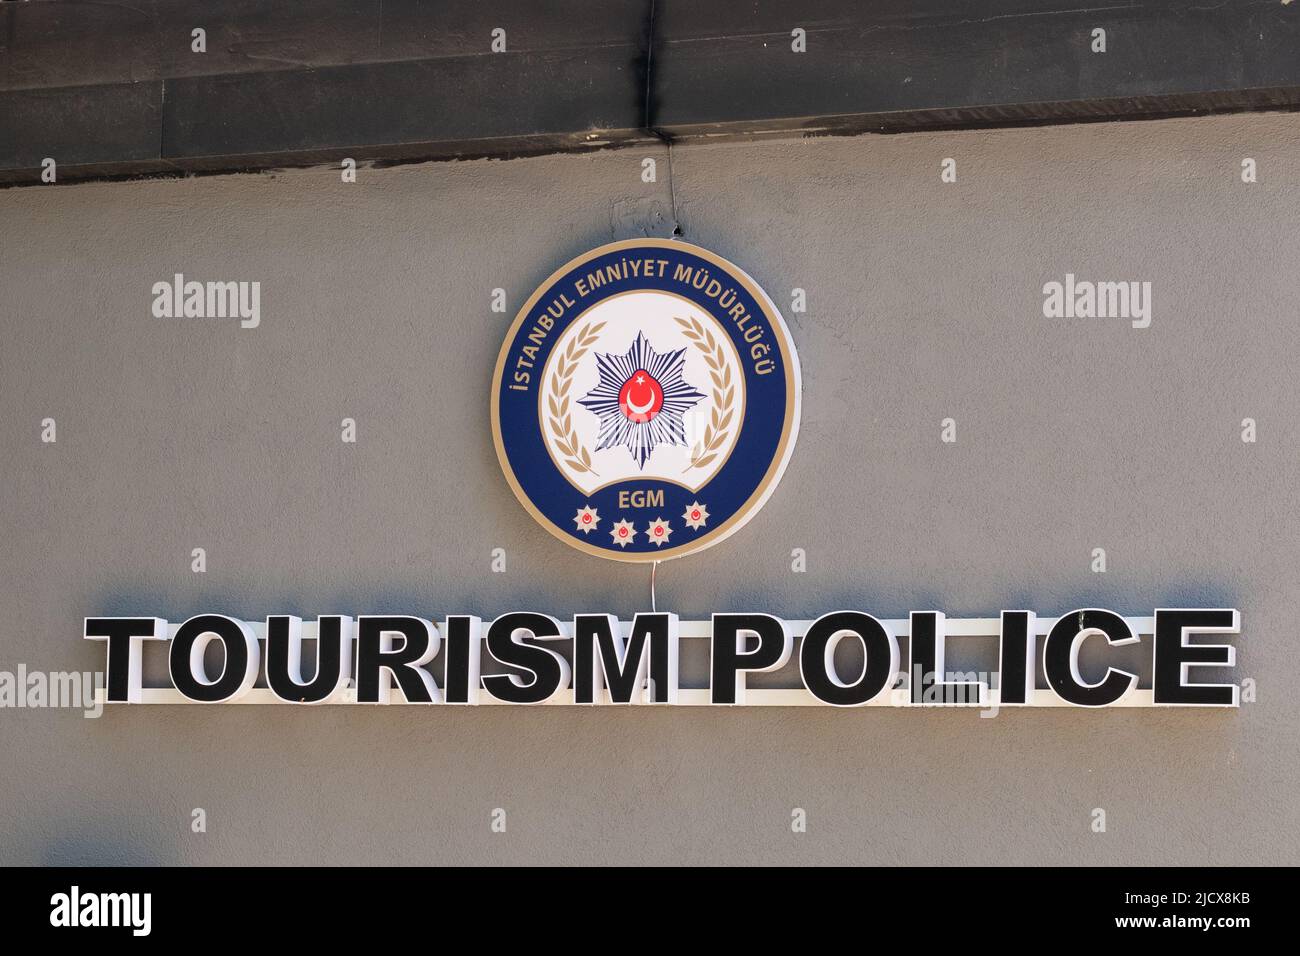 Tourism Police Istanbul Turkey Stock Photo